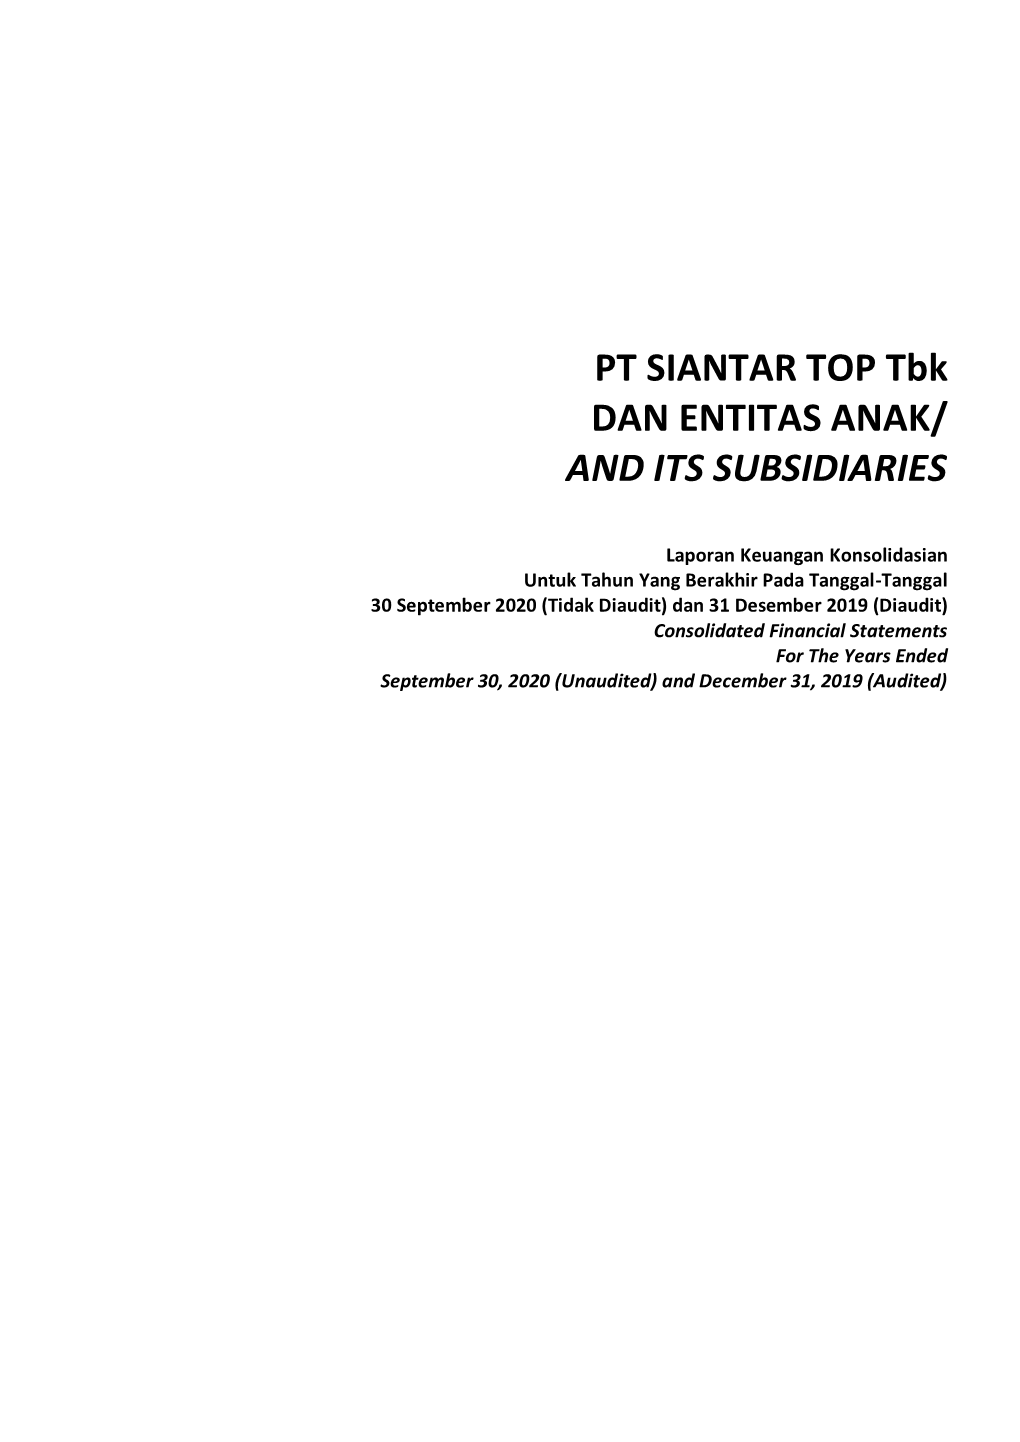 PT SIANTAR TOP Tbk DAN ENTITAS ANAK/ and ITS SUBSIDIARIES